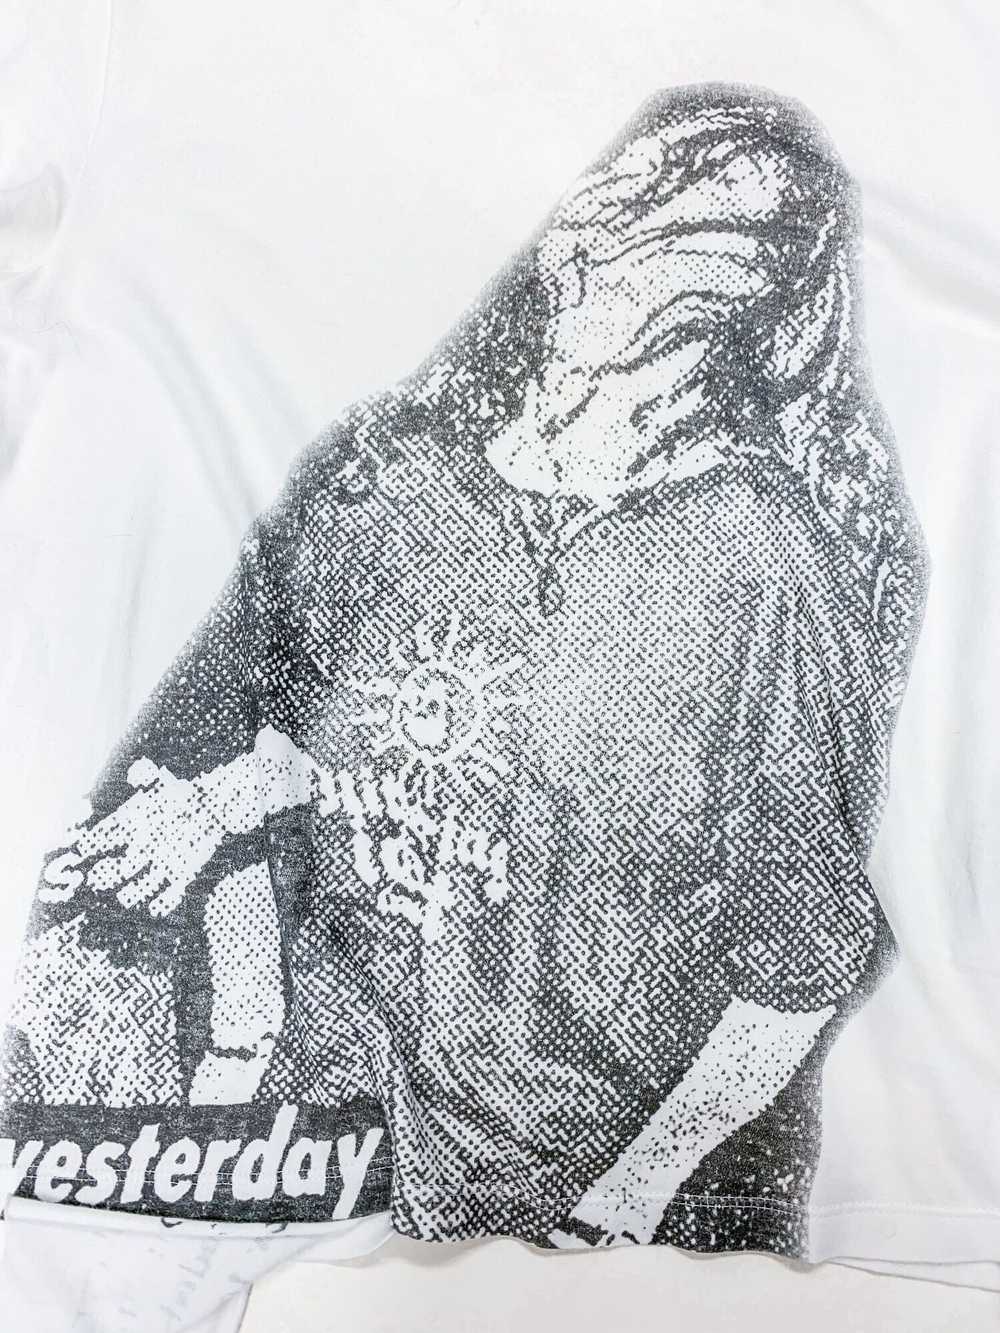 Raf by Raf Simons Cutoff Print T-Shirt "Yesterday" - image 2